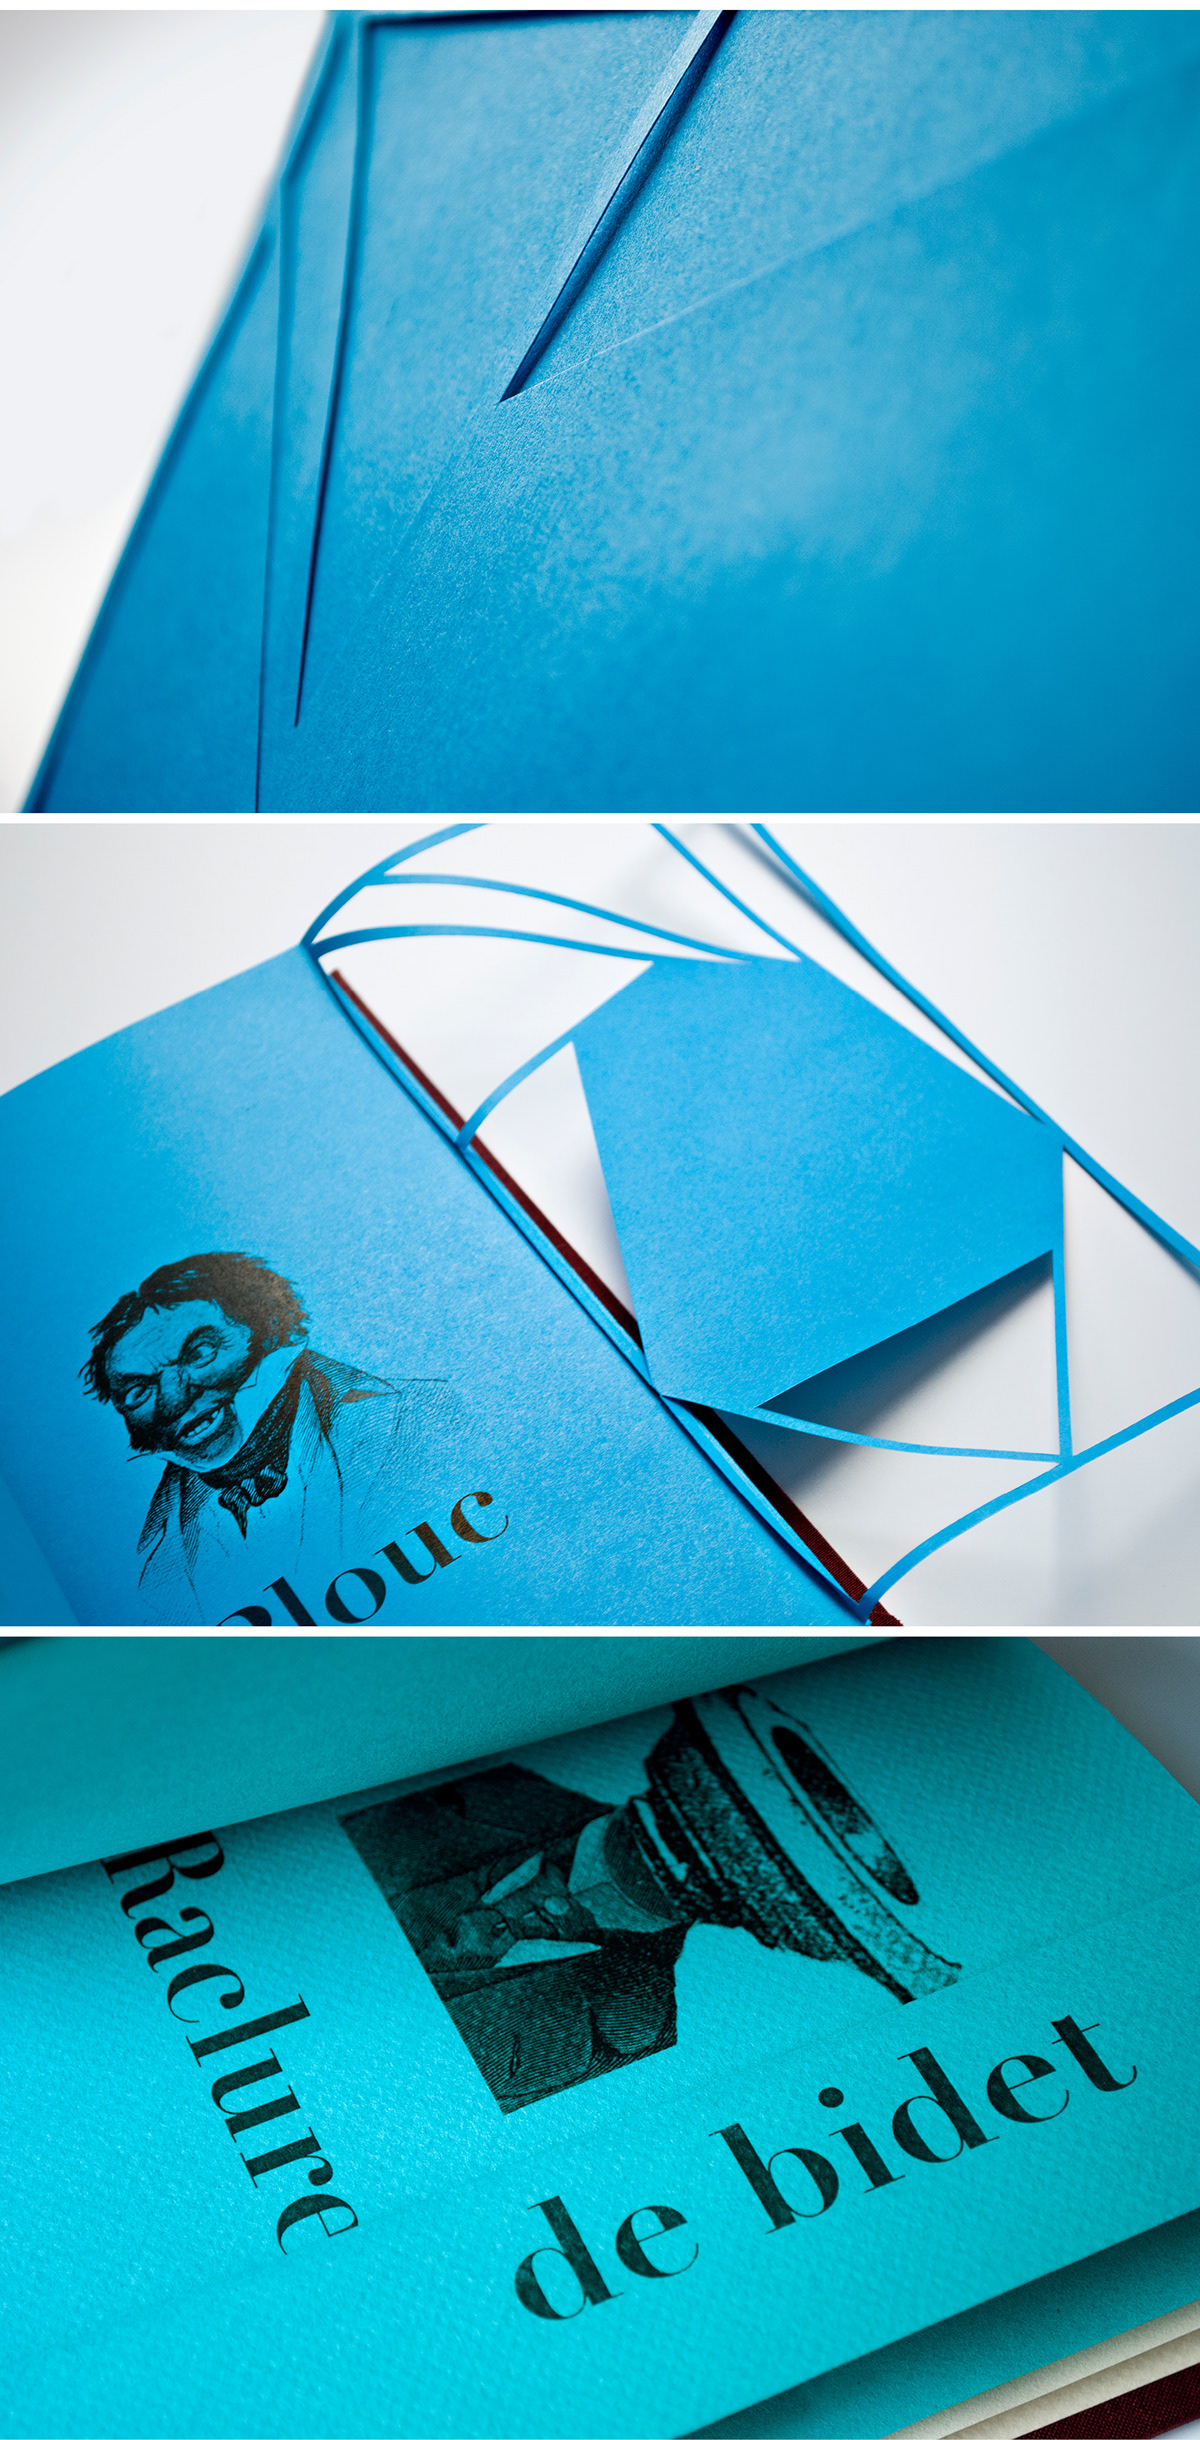 book paper fold folding design insultes gravure engraving colorfull